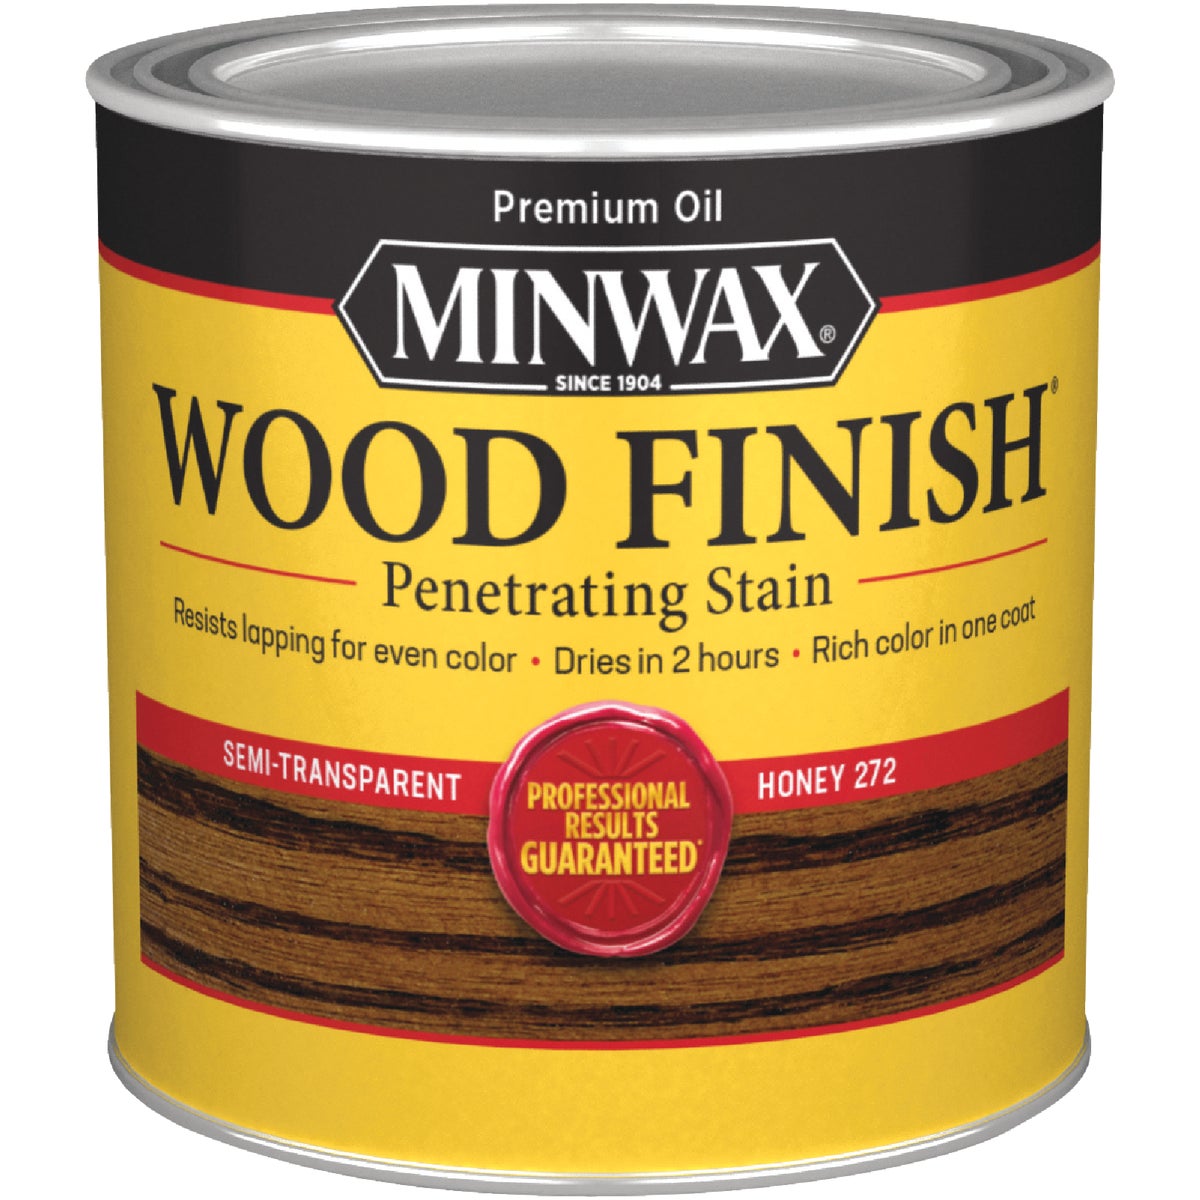 Minwax Wood Finish Penetrating Stain, Honey, 1/2 Pt.